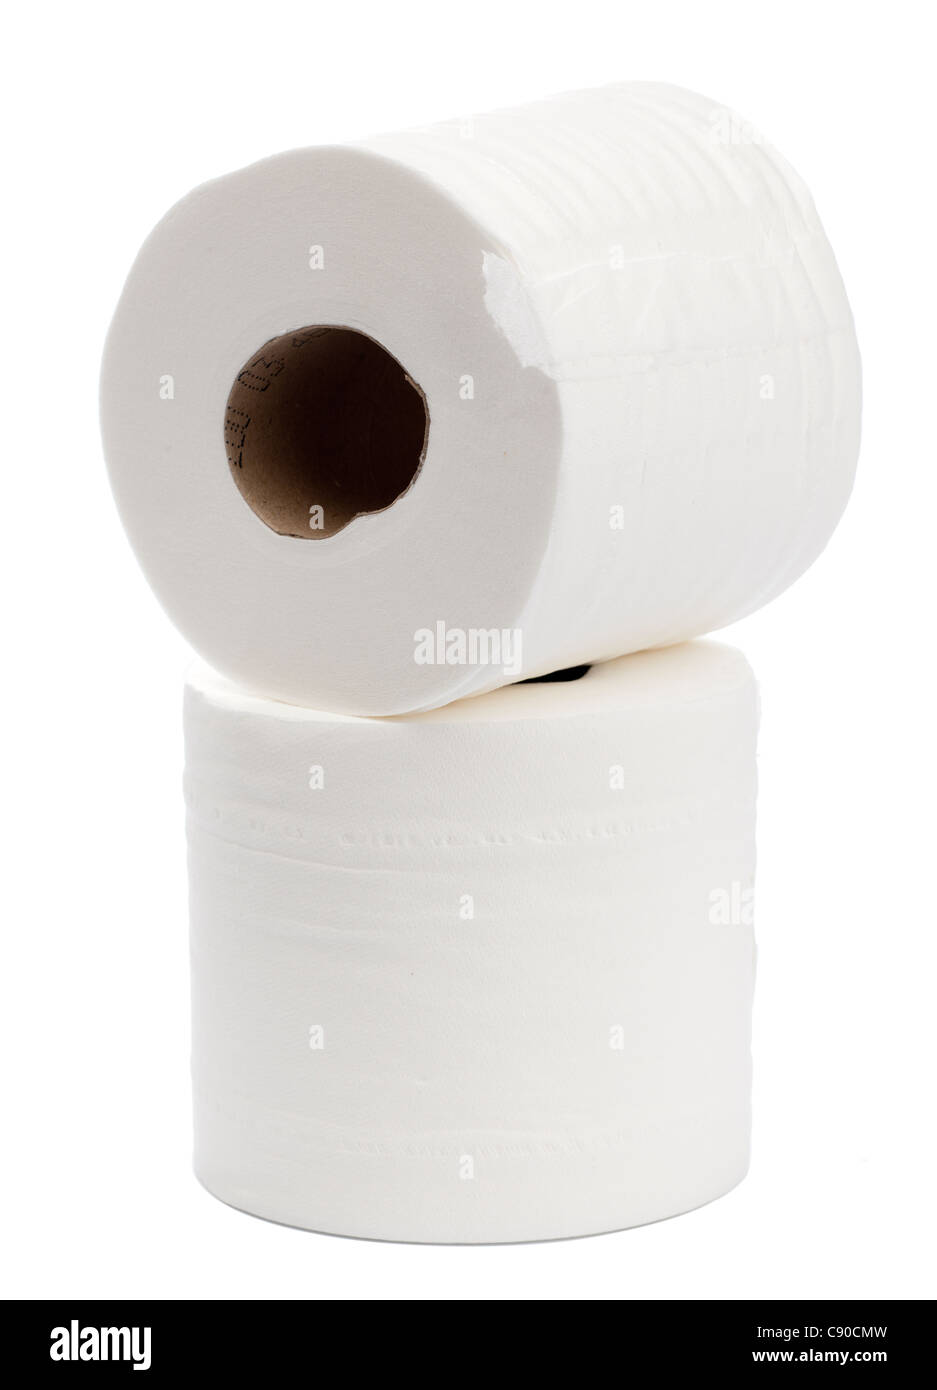 Bianco due rotoli di carta igienica Foto stock - Alamy